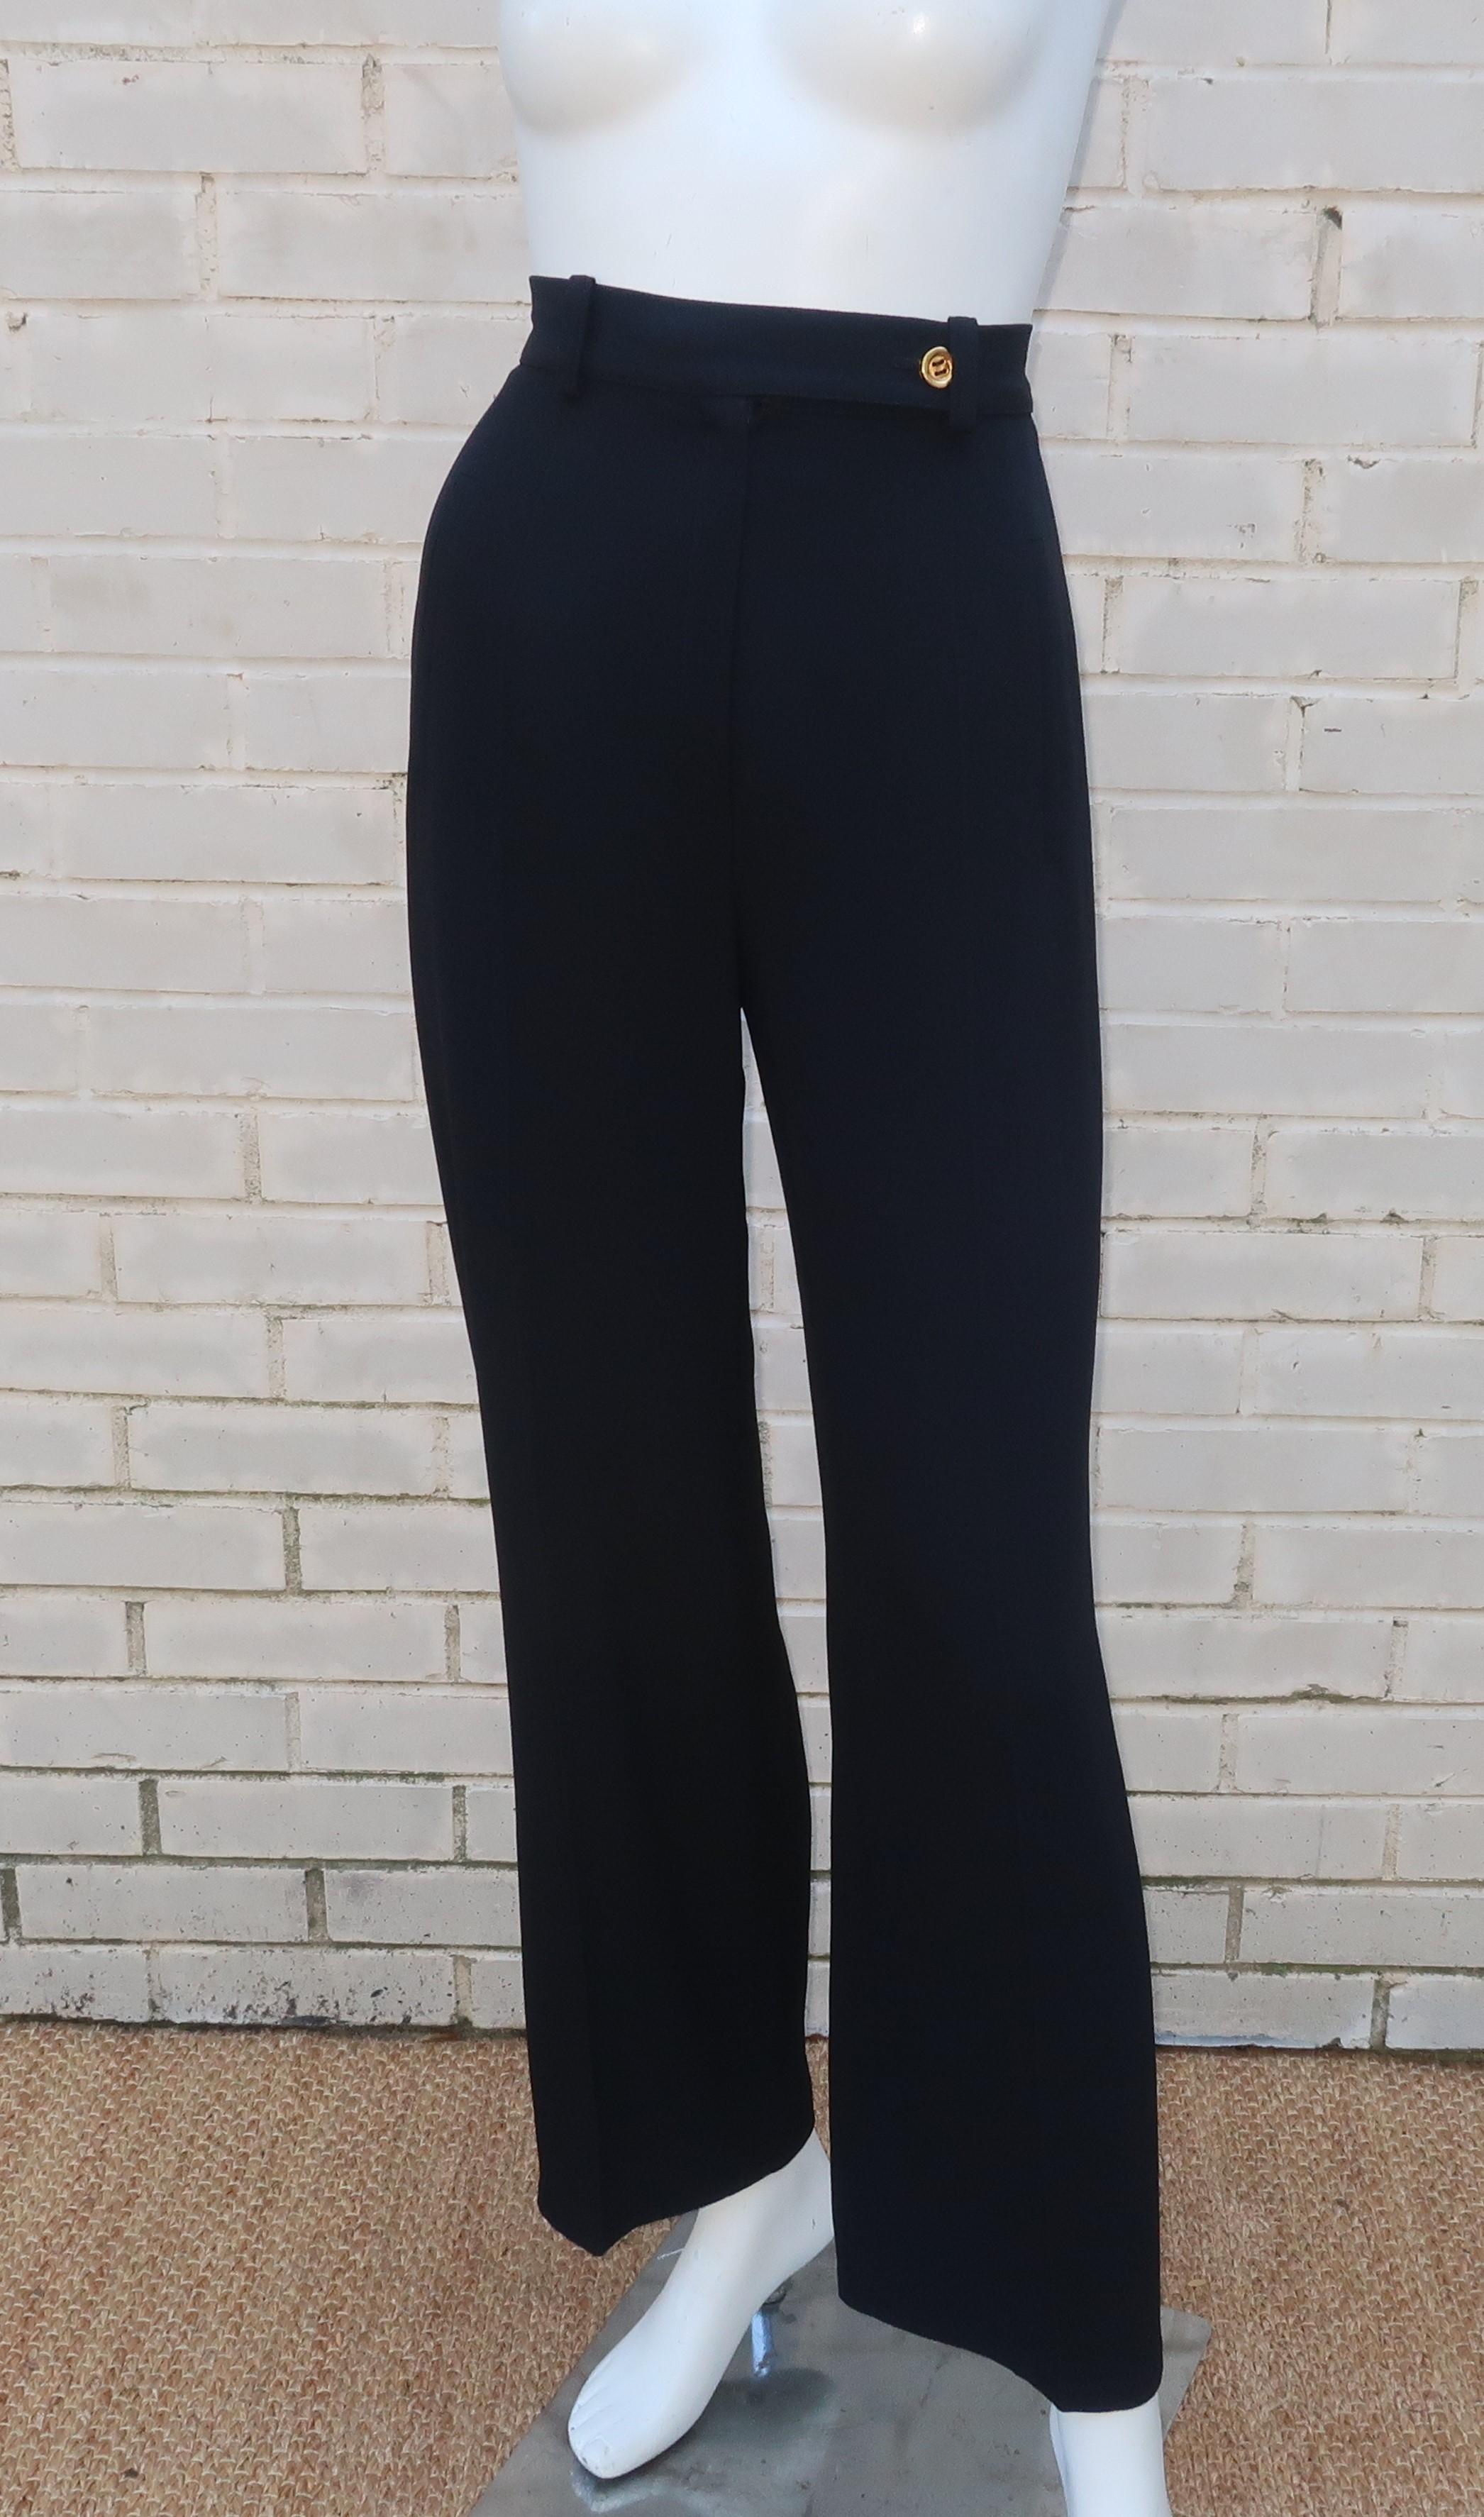 Sonia Rykiel Three Piece Tuxedo Style Black Pant Suit, 1980's For Sale 7